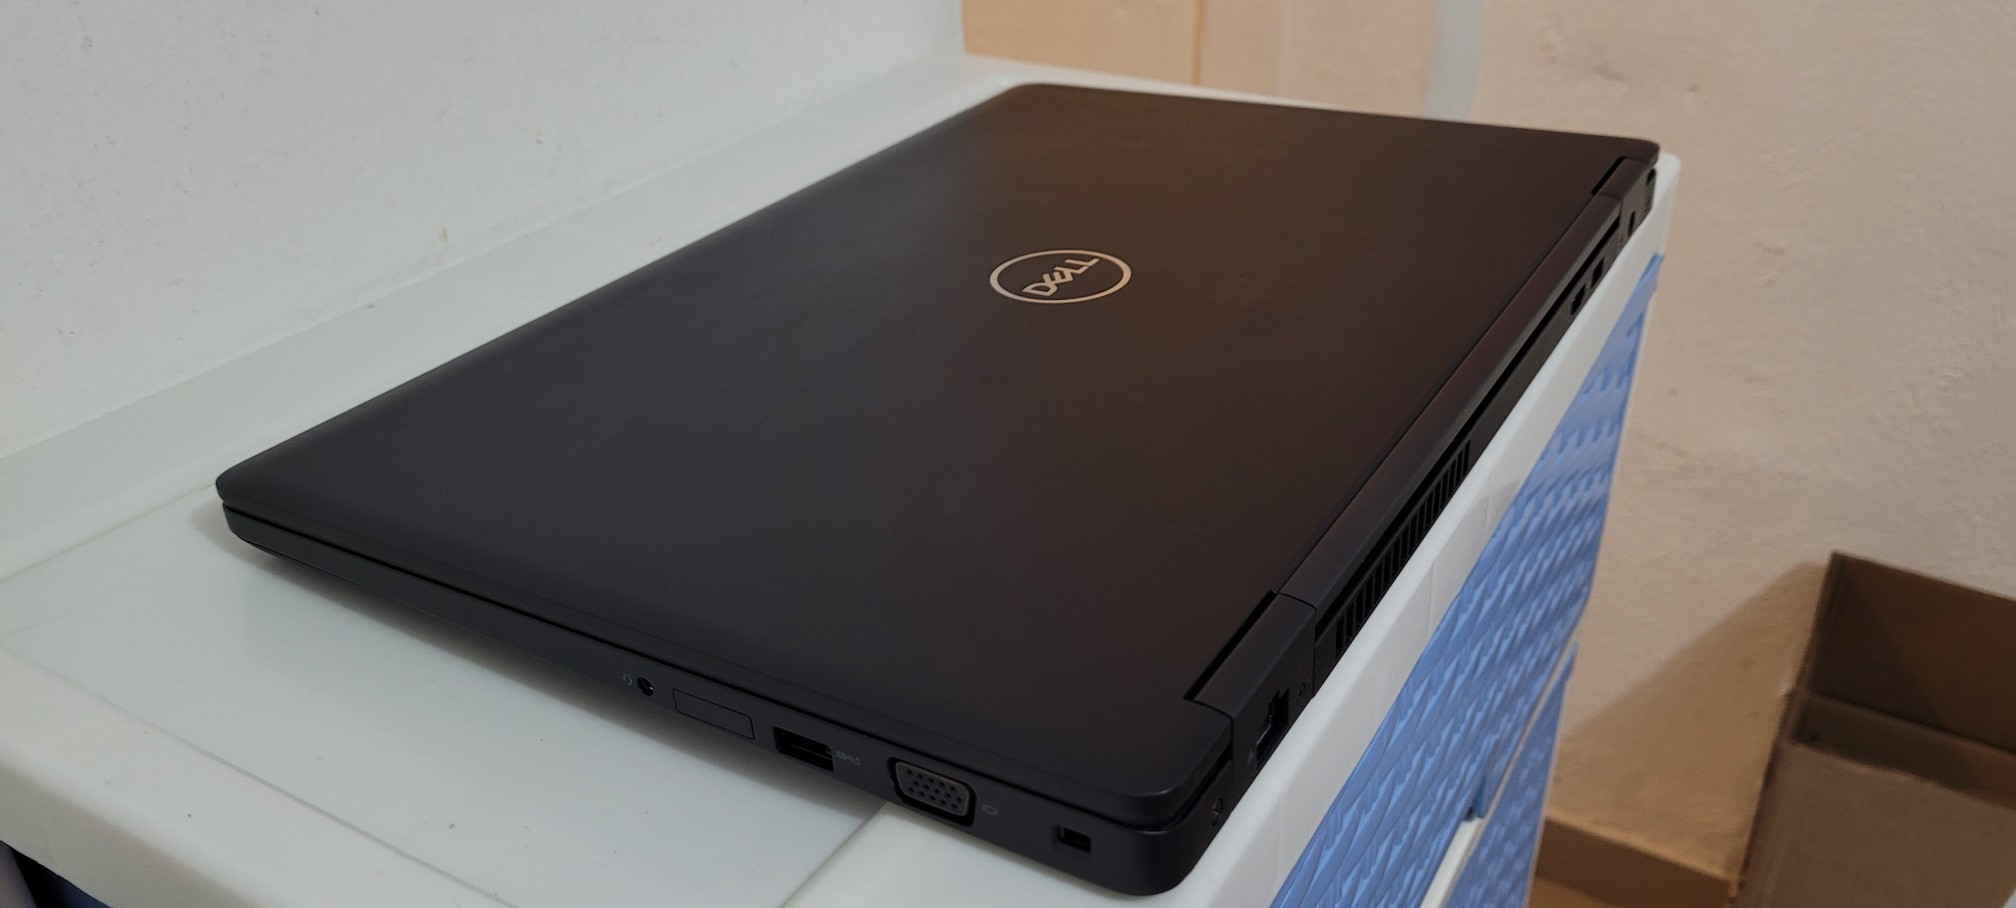 computadoras y laptops - Dell 5570 17 Pulg Core i7 6ta Gen Ram 16gb Disco 256gb SSD aty Radeon R7 2